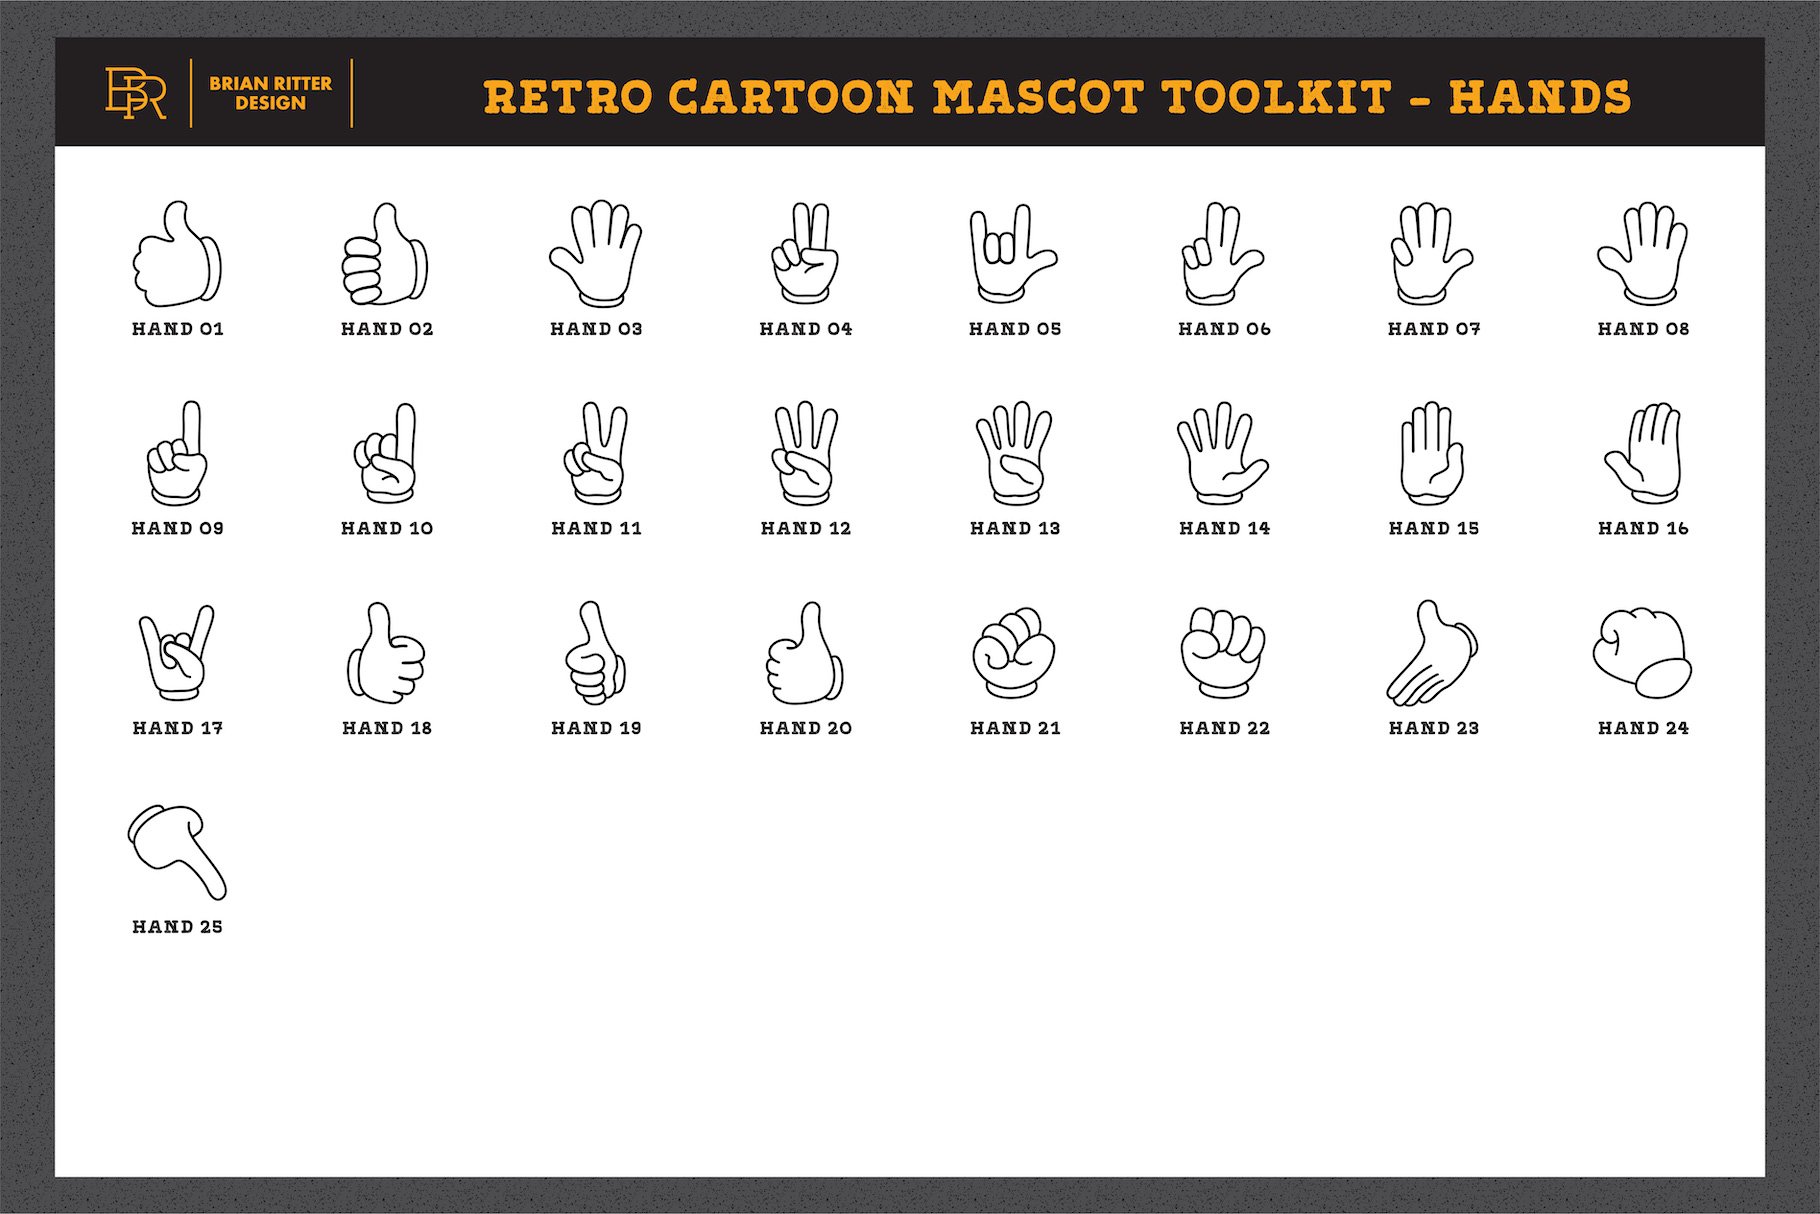 Retro cartoon mascot toolkit - hands.